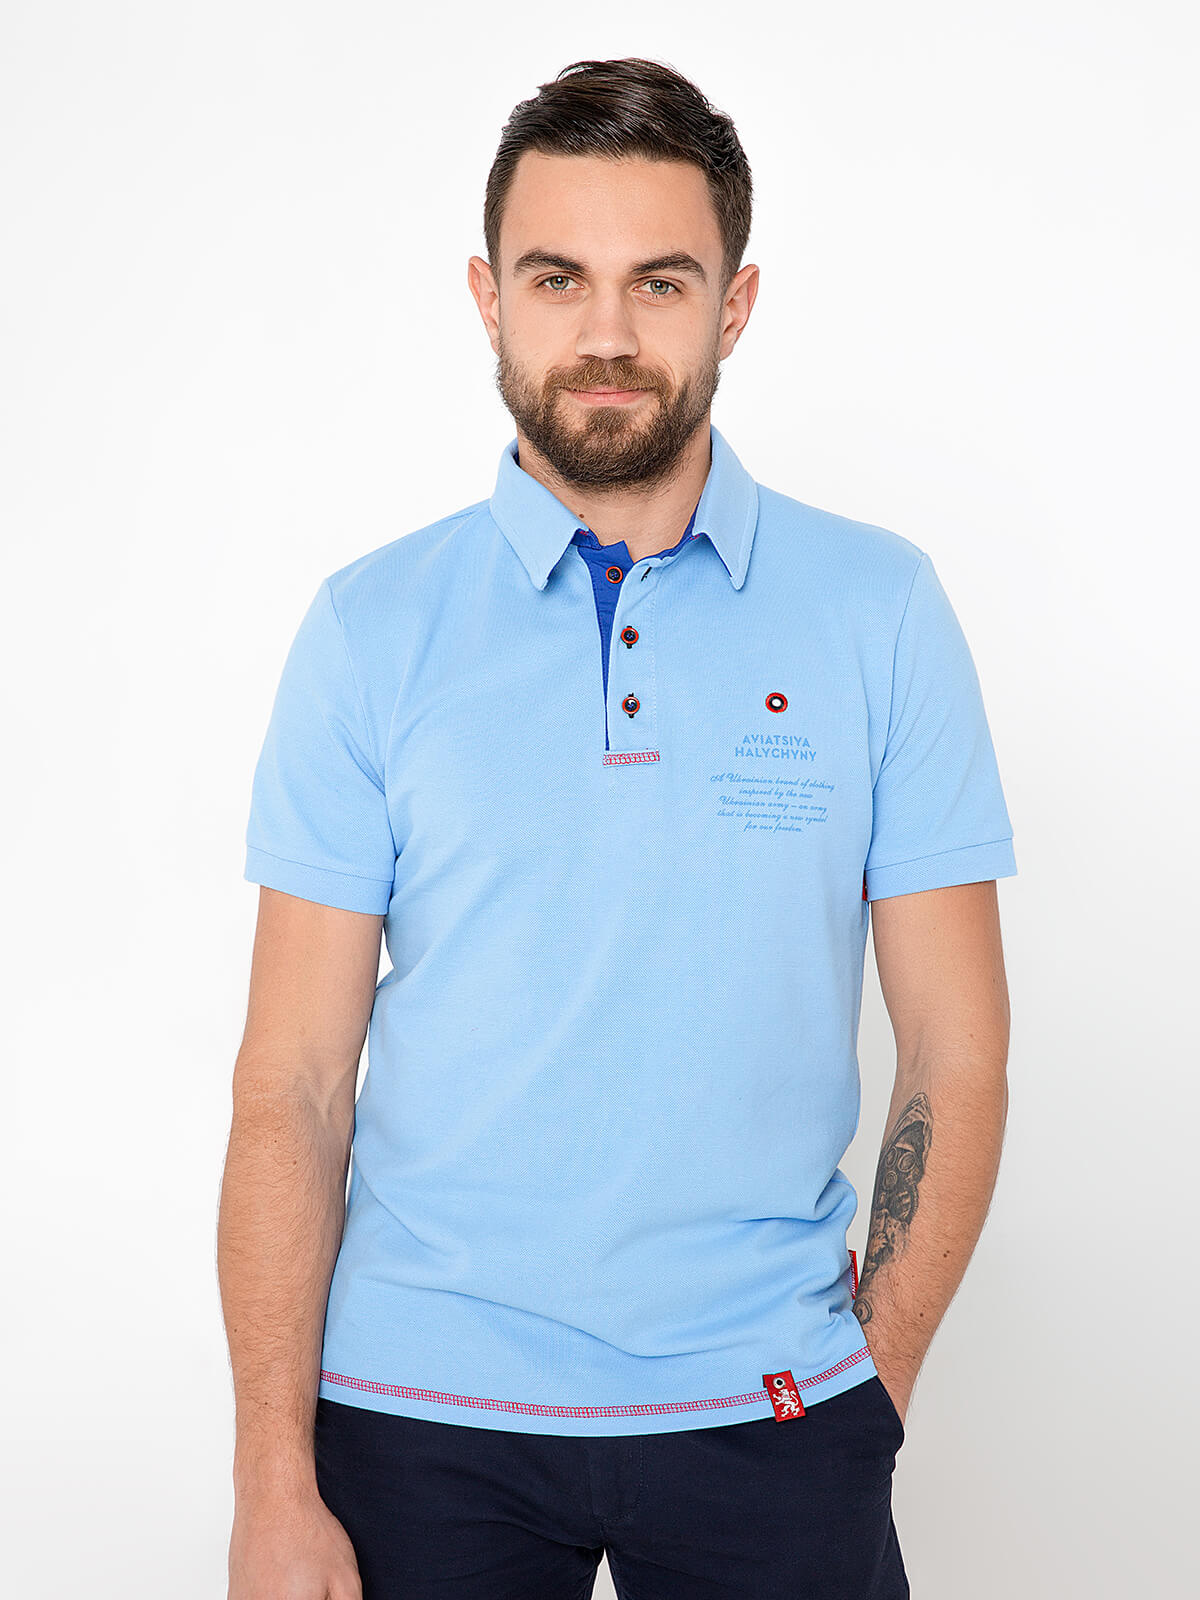 Men's Polo Shirt Wings. Color sky blue. Unisex polo (men’s sizes).